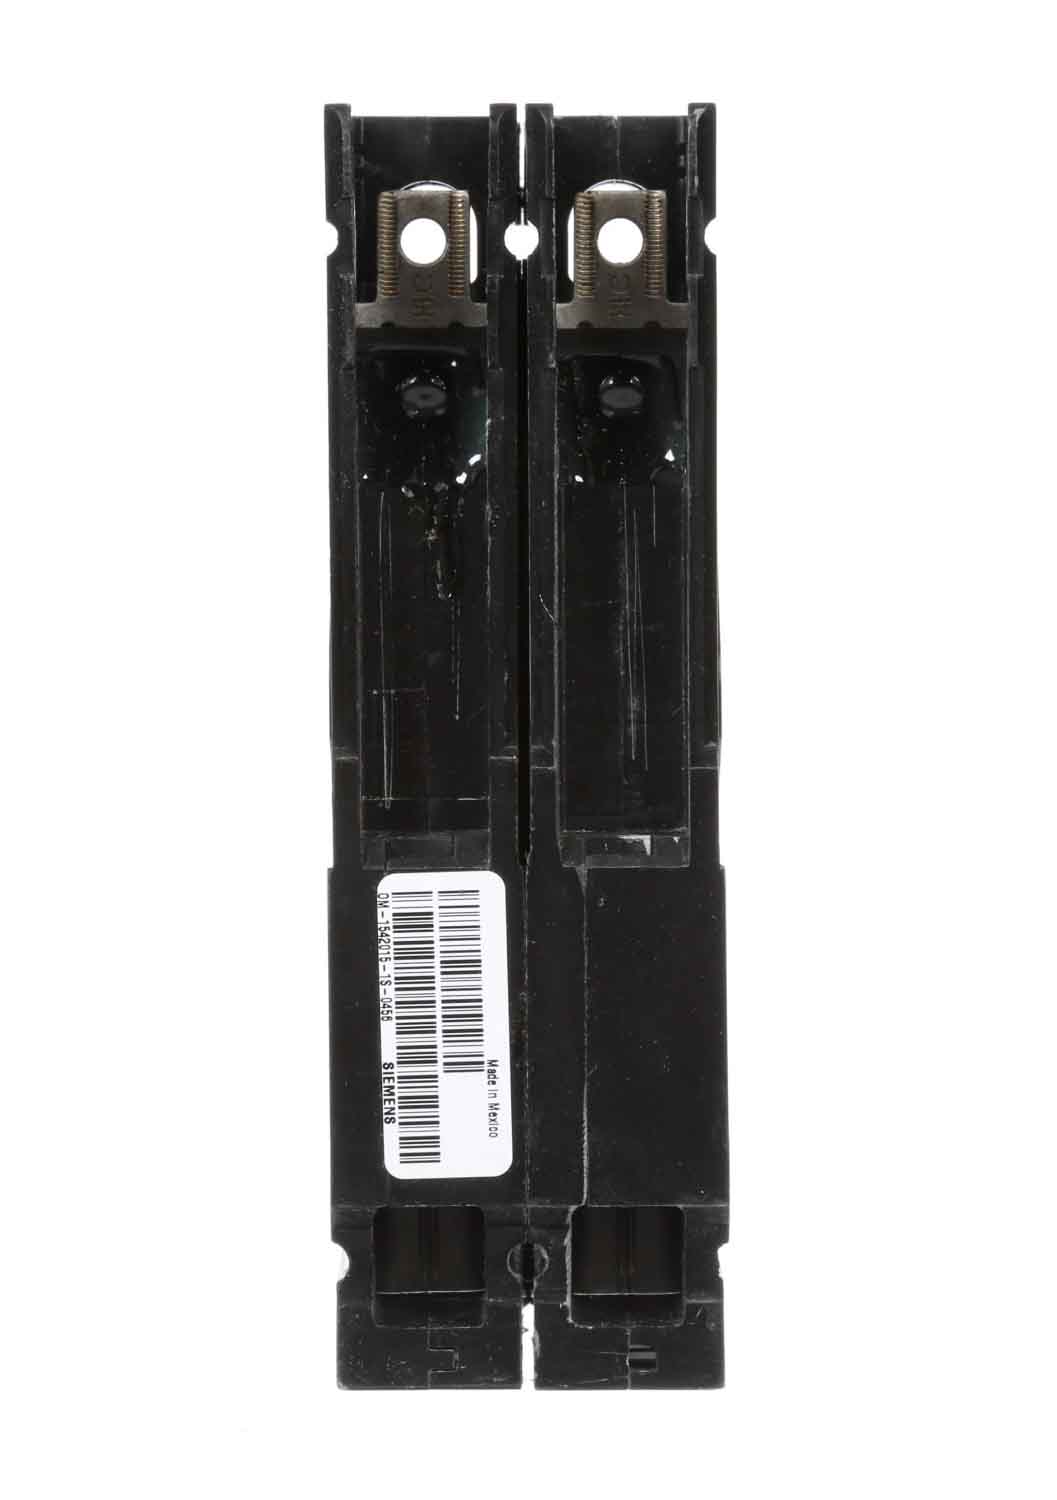 HED42B025 - Siemens - Molded Case Circuit Breaker